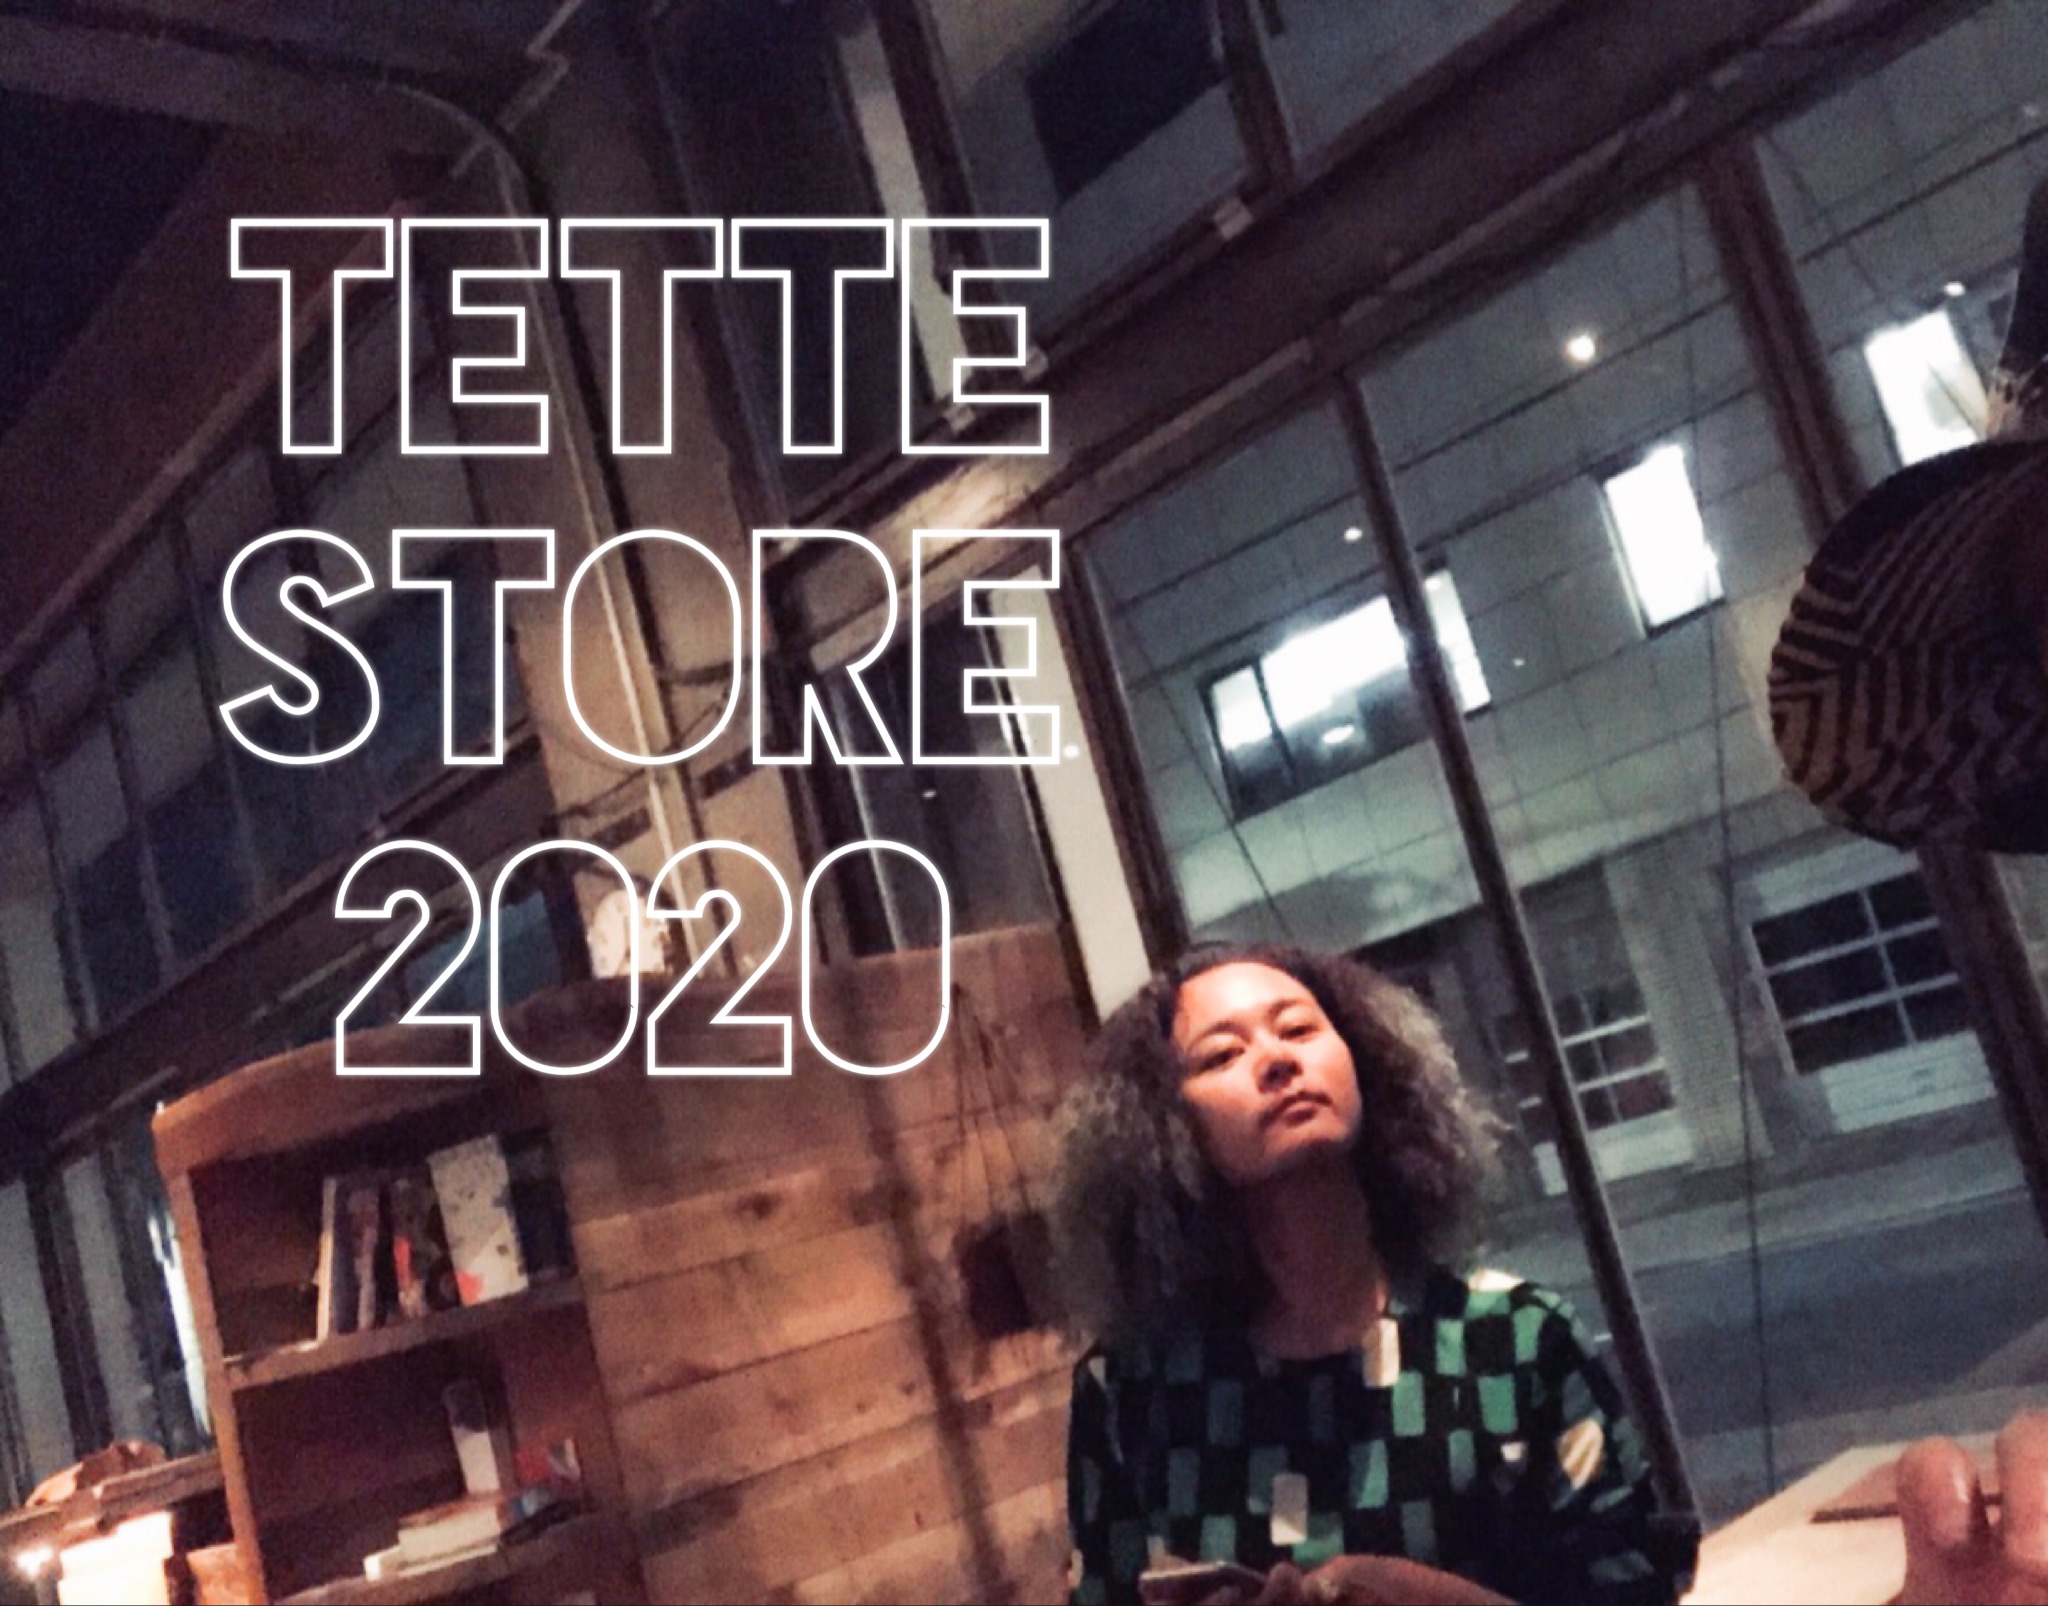 TETTE STORE 2020